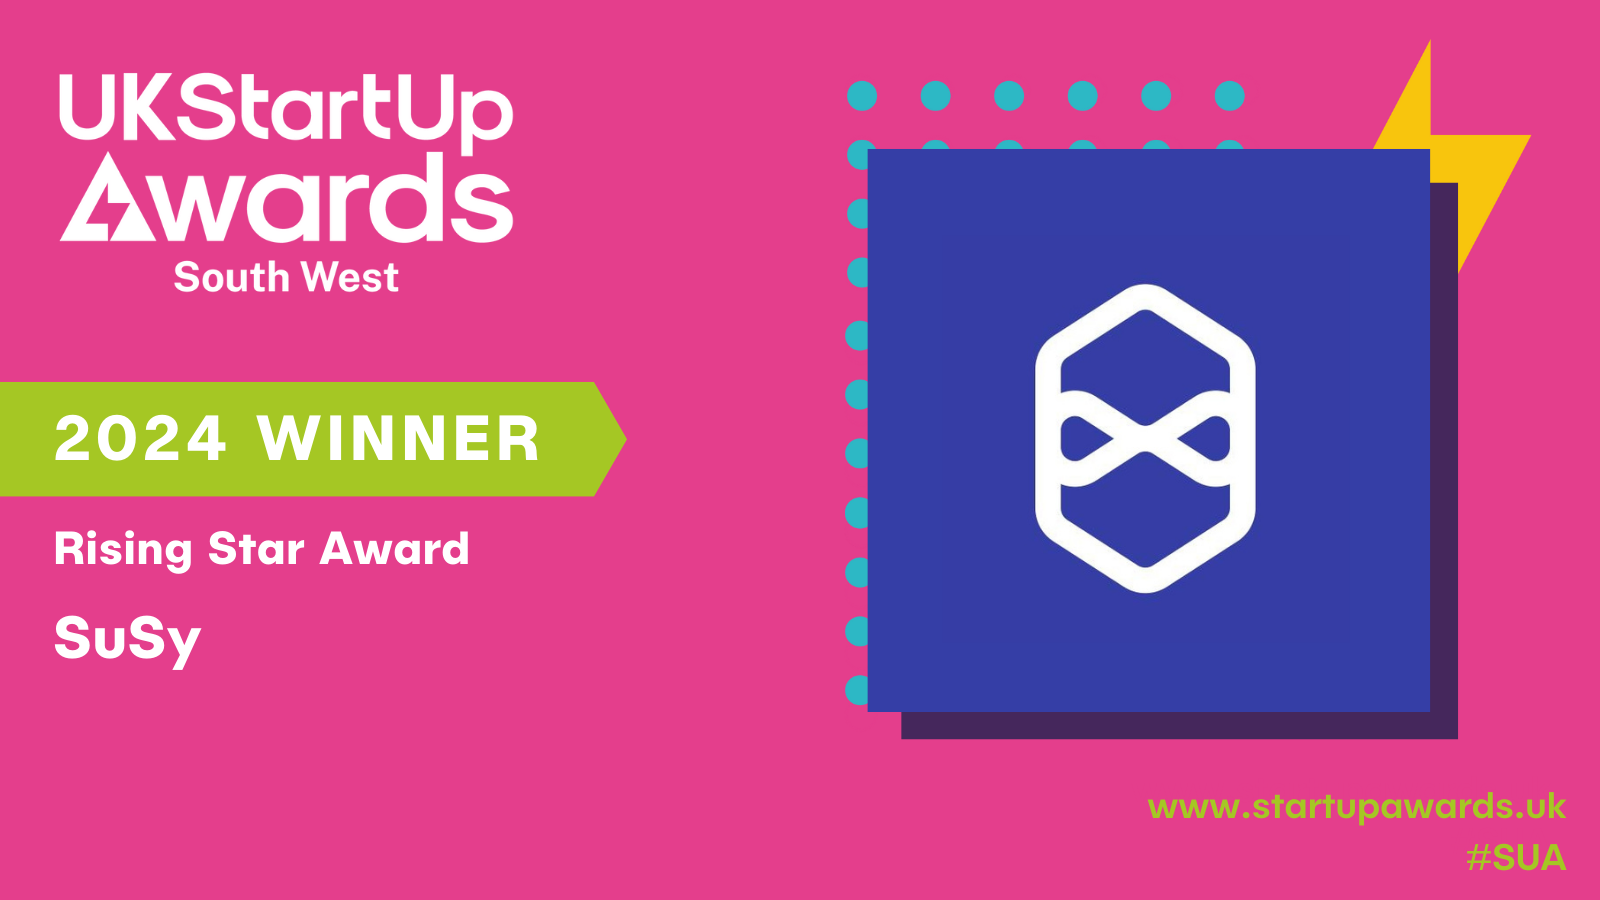 UK StartUp Awards South West winner of the Rising Star Award